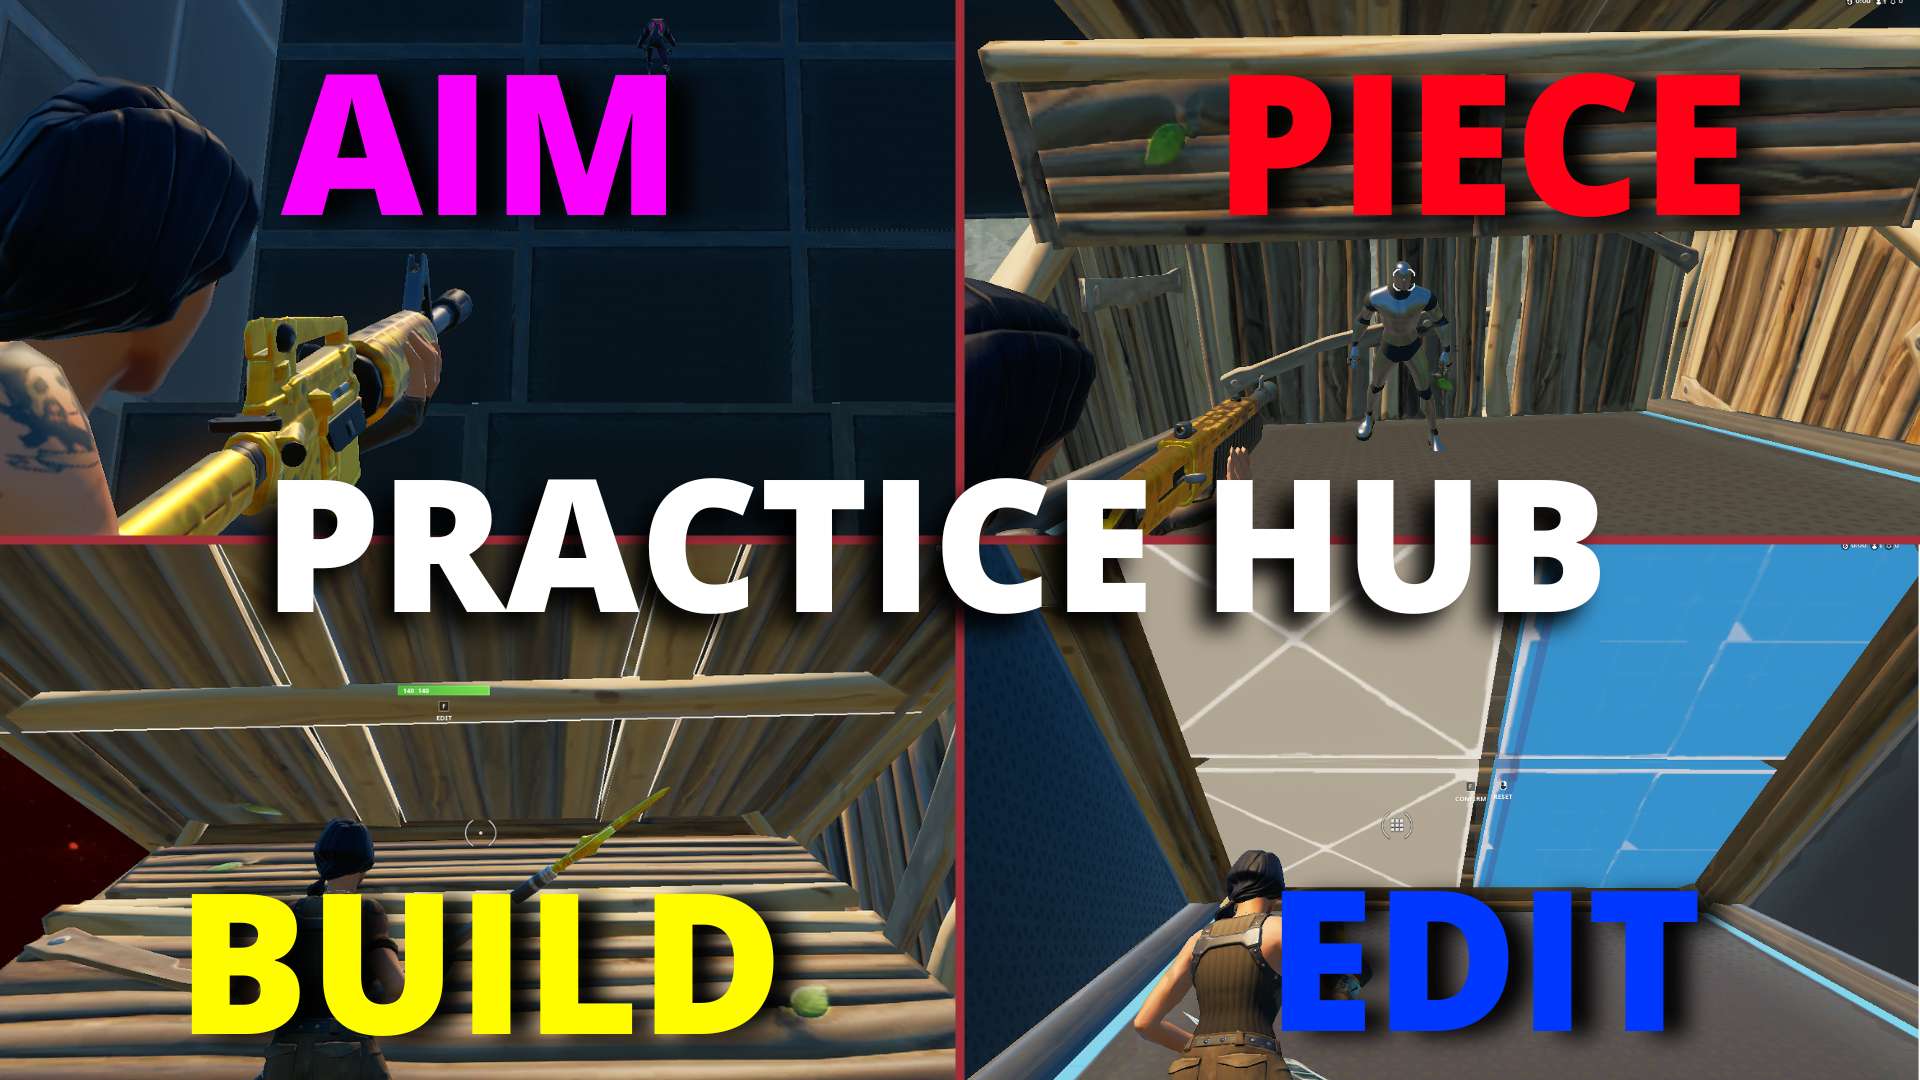 Practice Hub 🎮 Piece 🎯 Aim ✏️ Edit